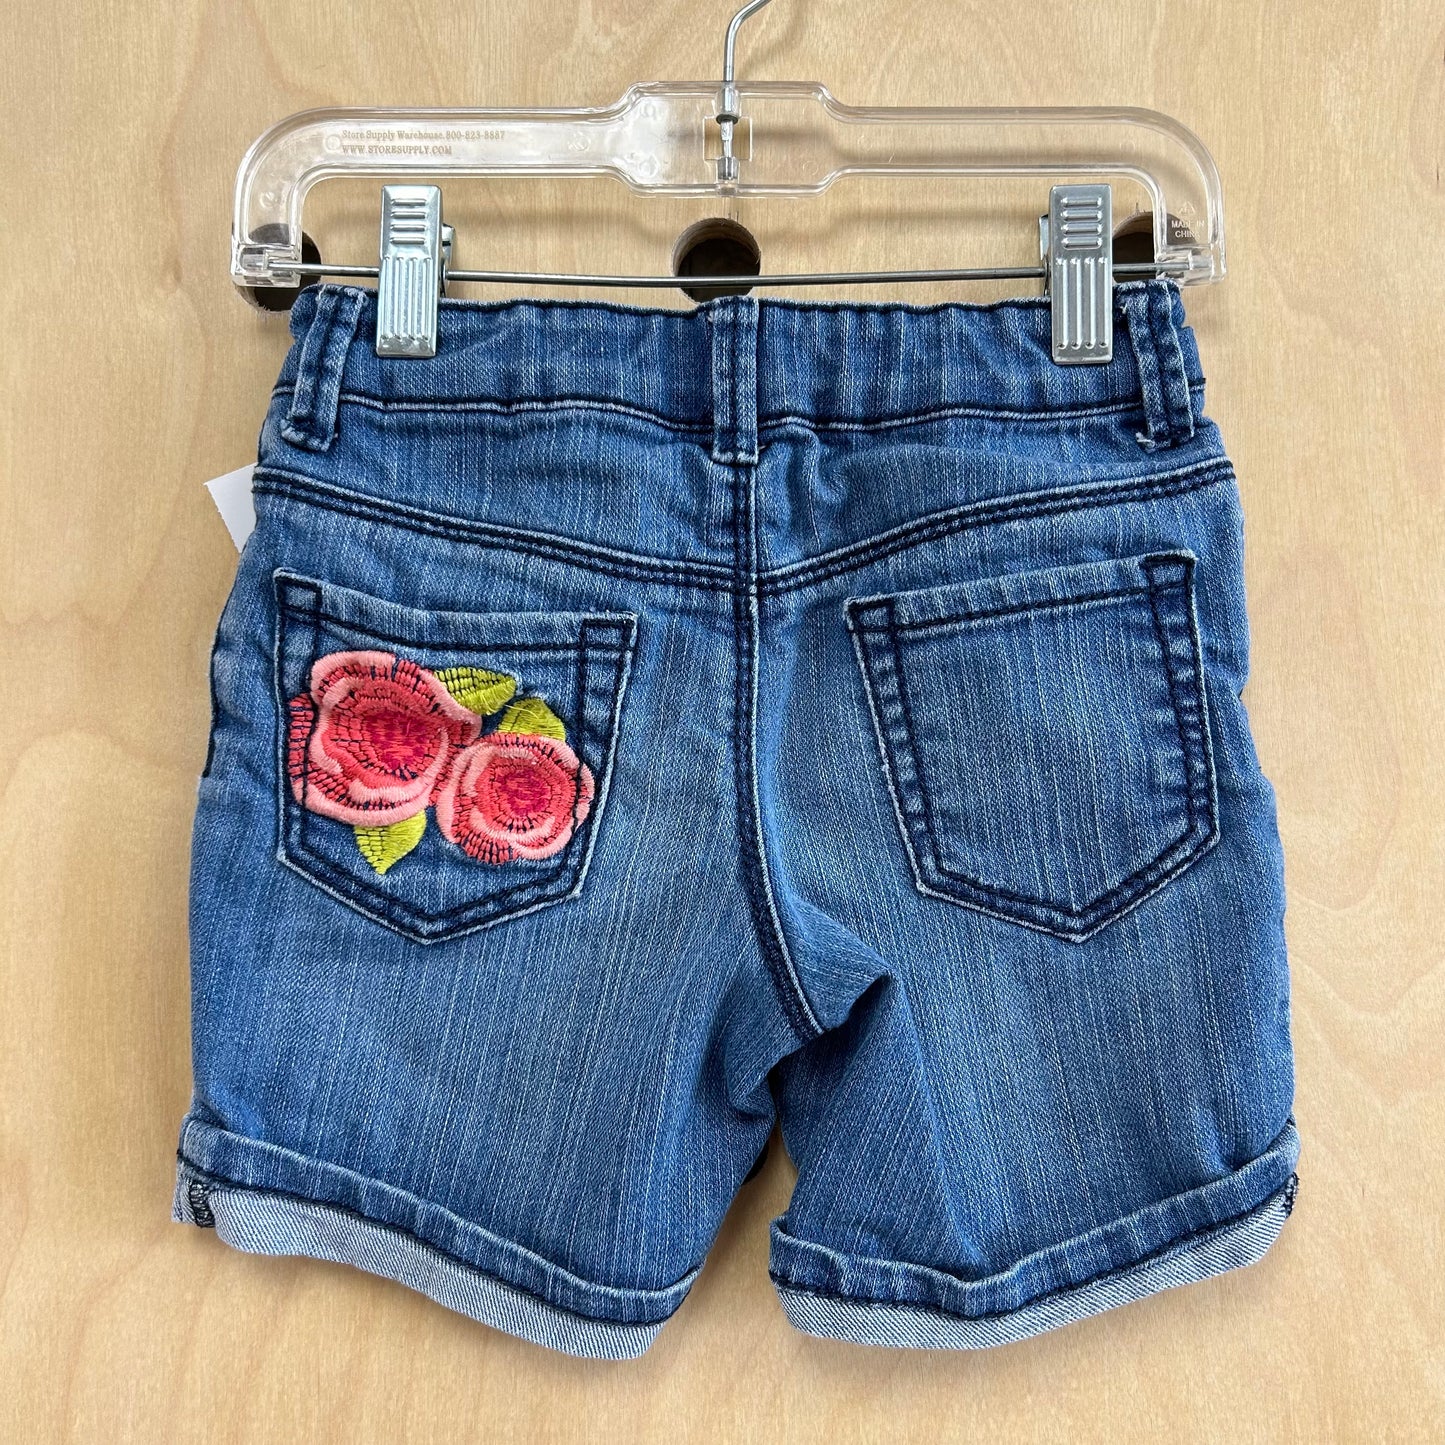 Denim Floral Embroidered Shorts